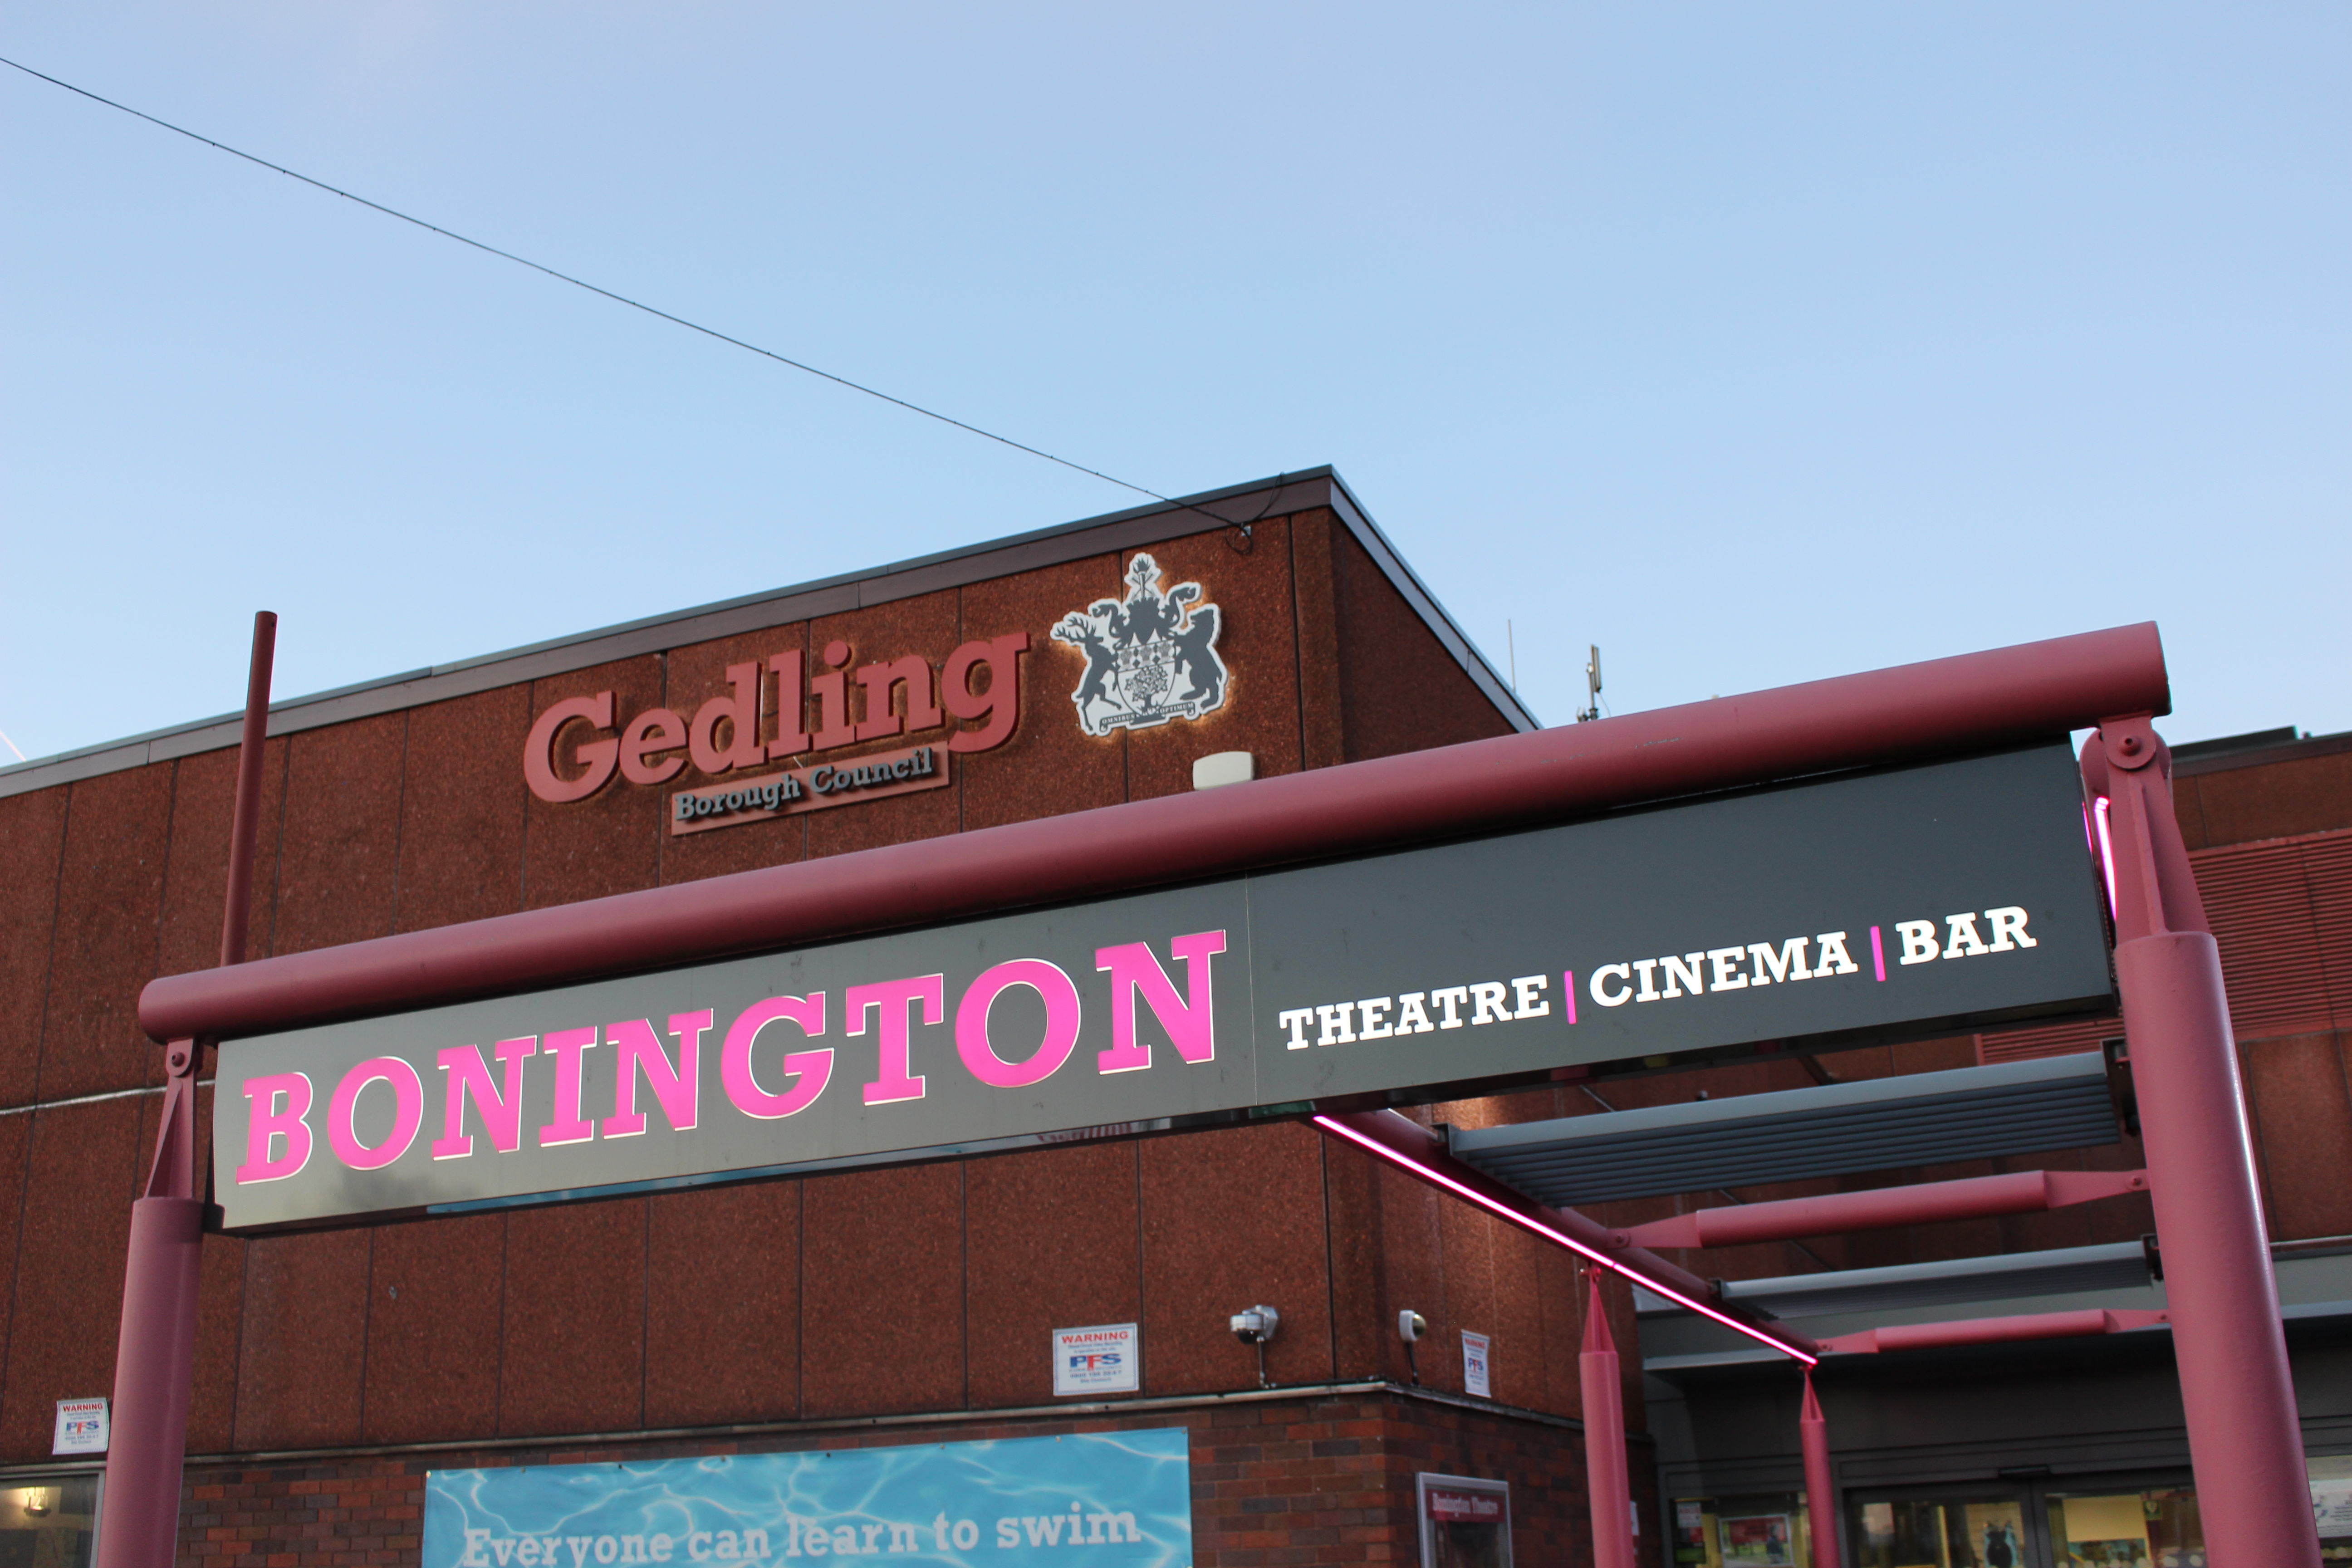 Bonington Cinema and Theatre exterior